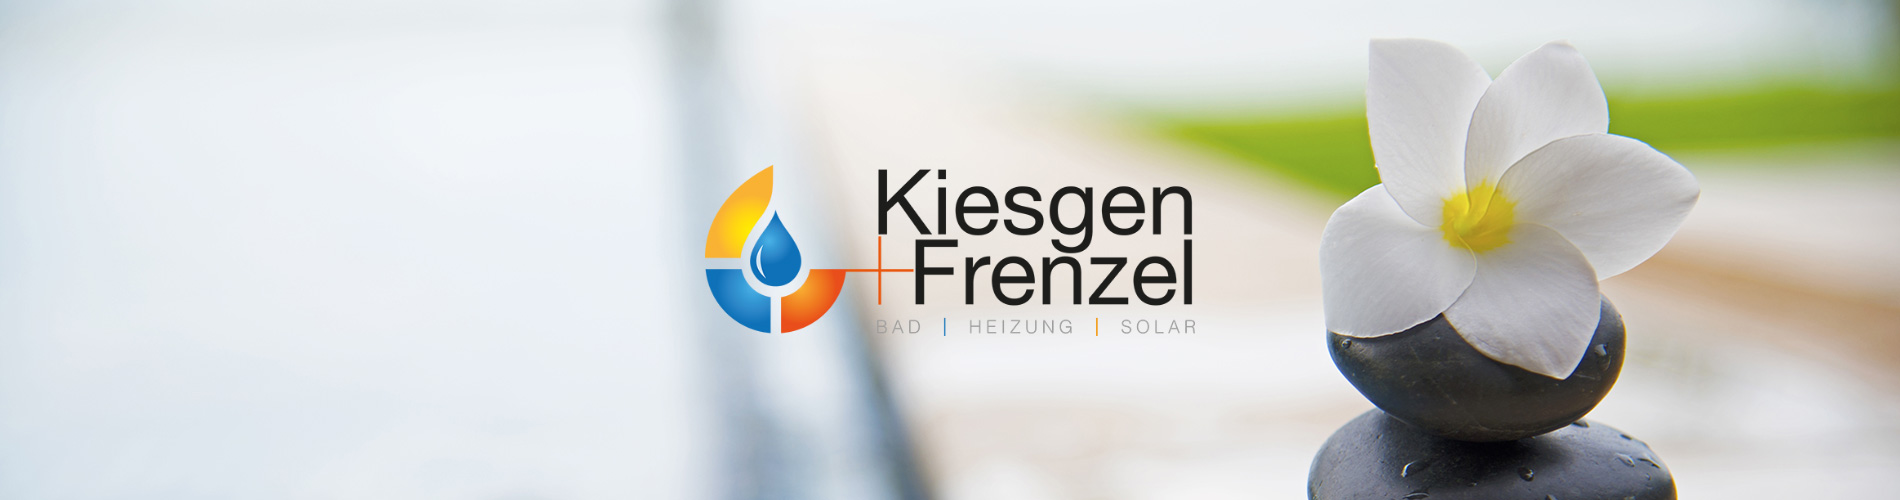 Kiesgen+Frenzel Kinospot im Mosel-Kino Bernkastel-Kues